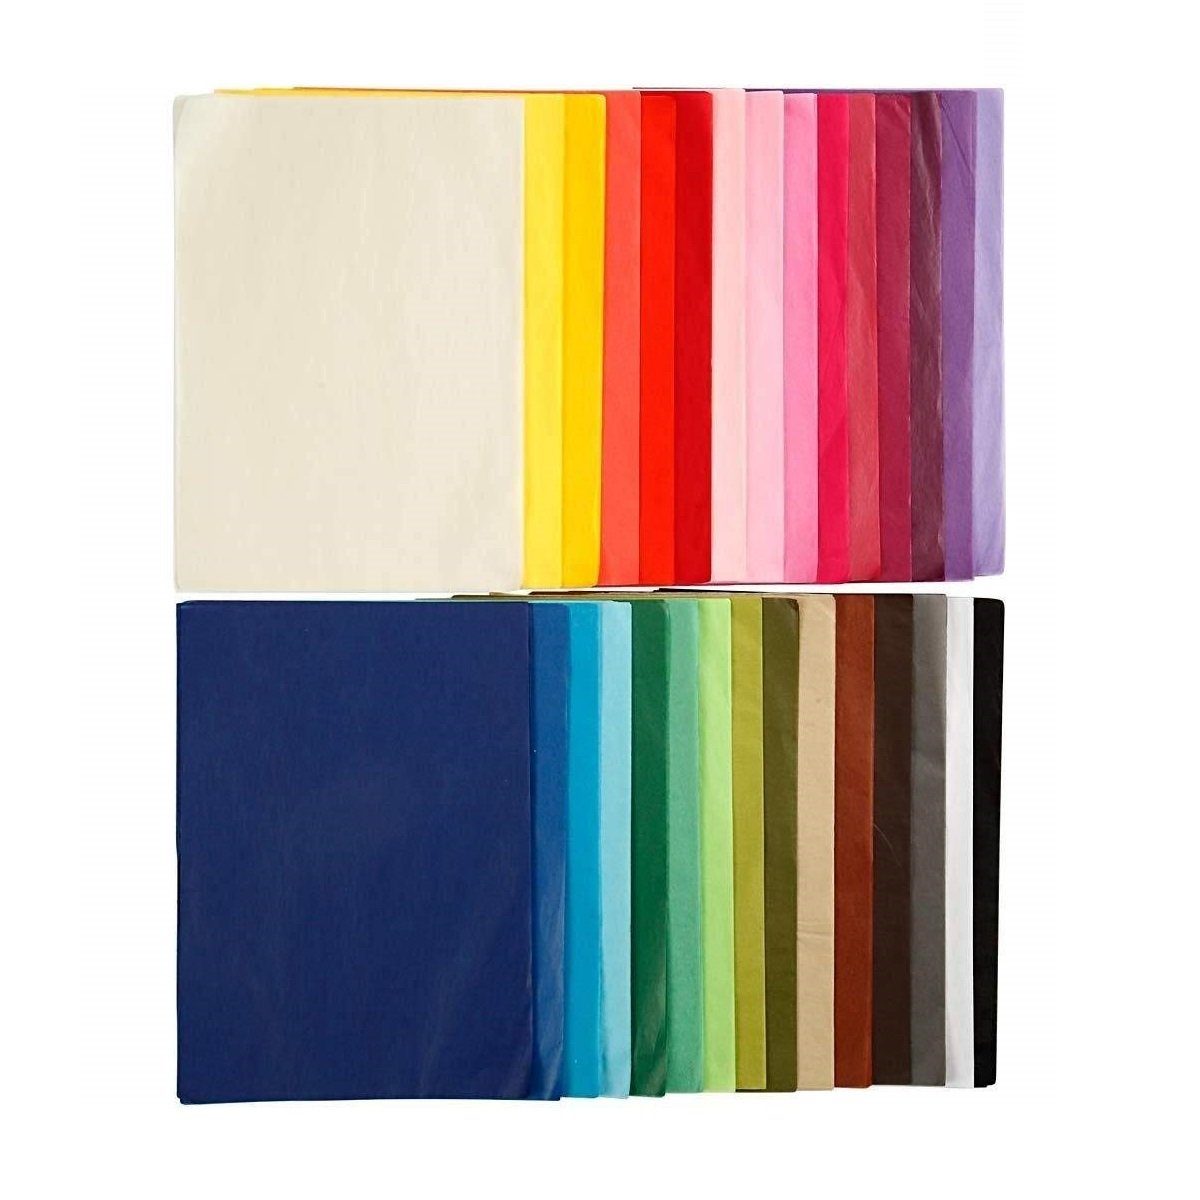 creativ company Seidenpapier 20914, 300 Blatt mit 30 verschiedenen Farben -, 10 Blatt Pro Farbe - Transparentes Seidenpapier